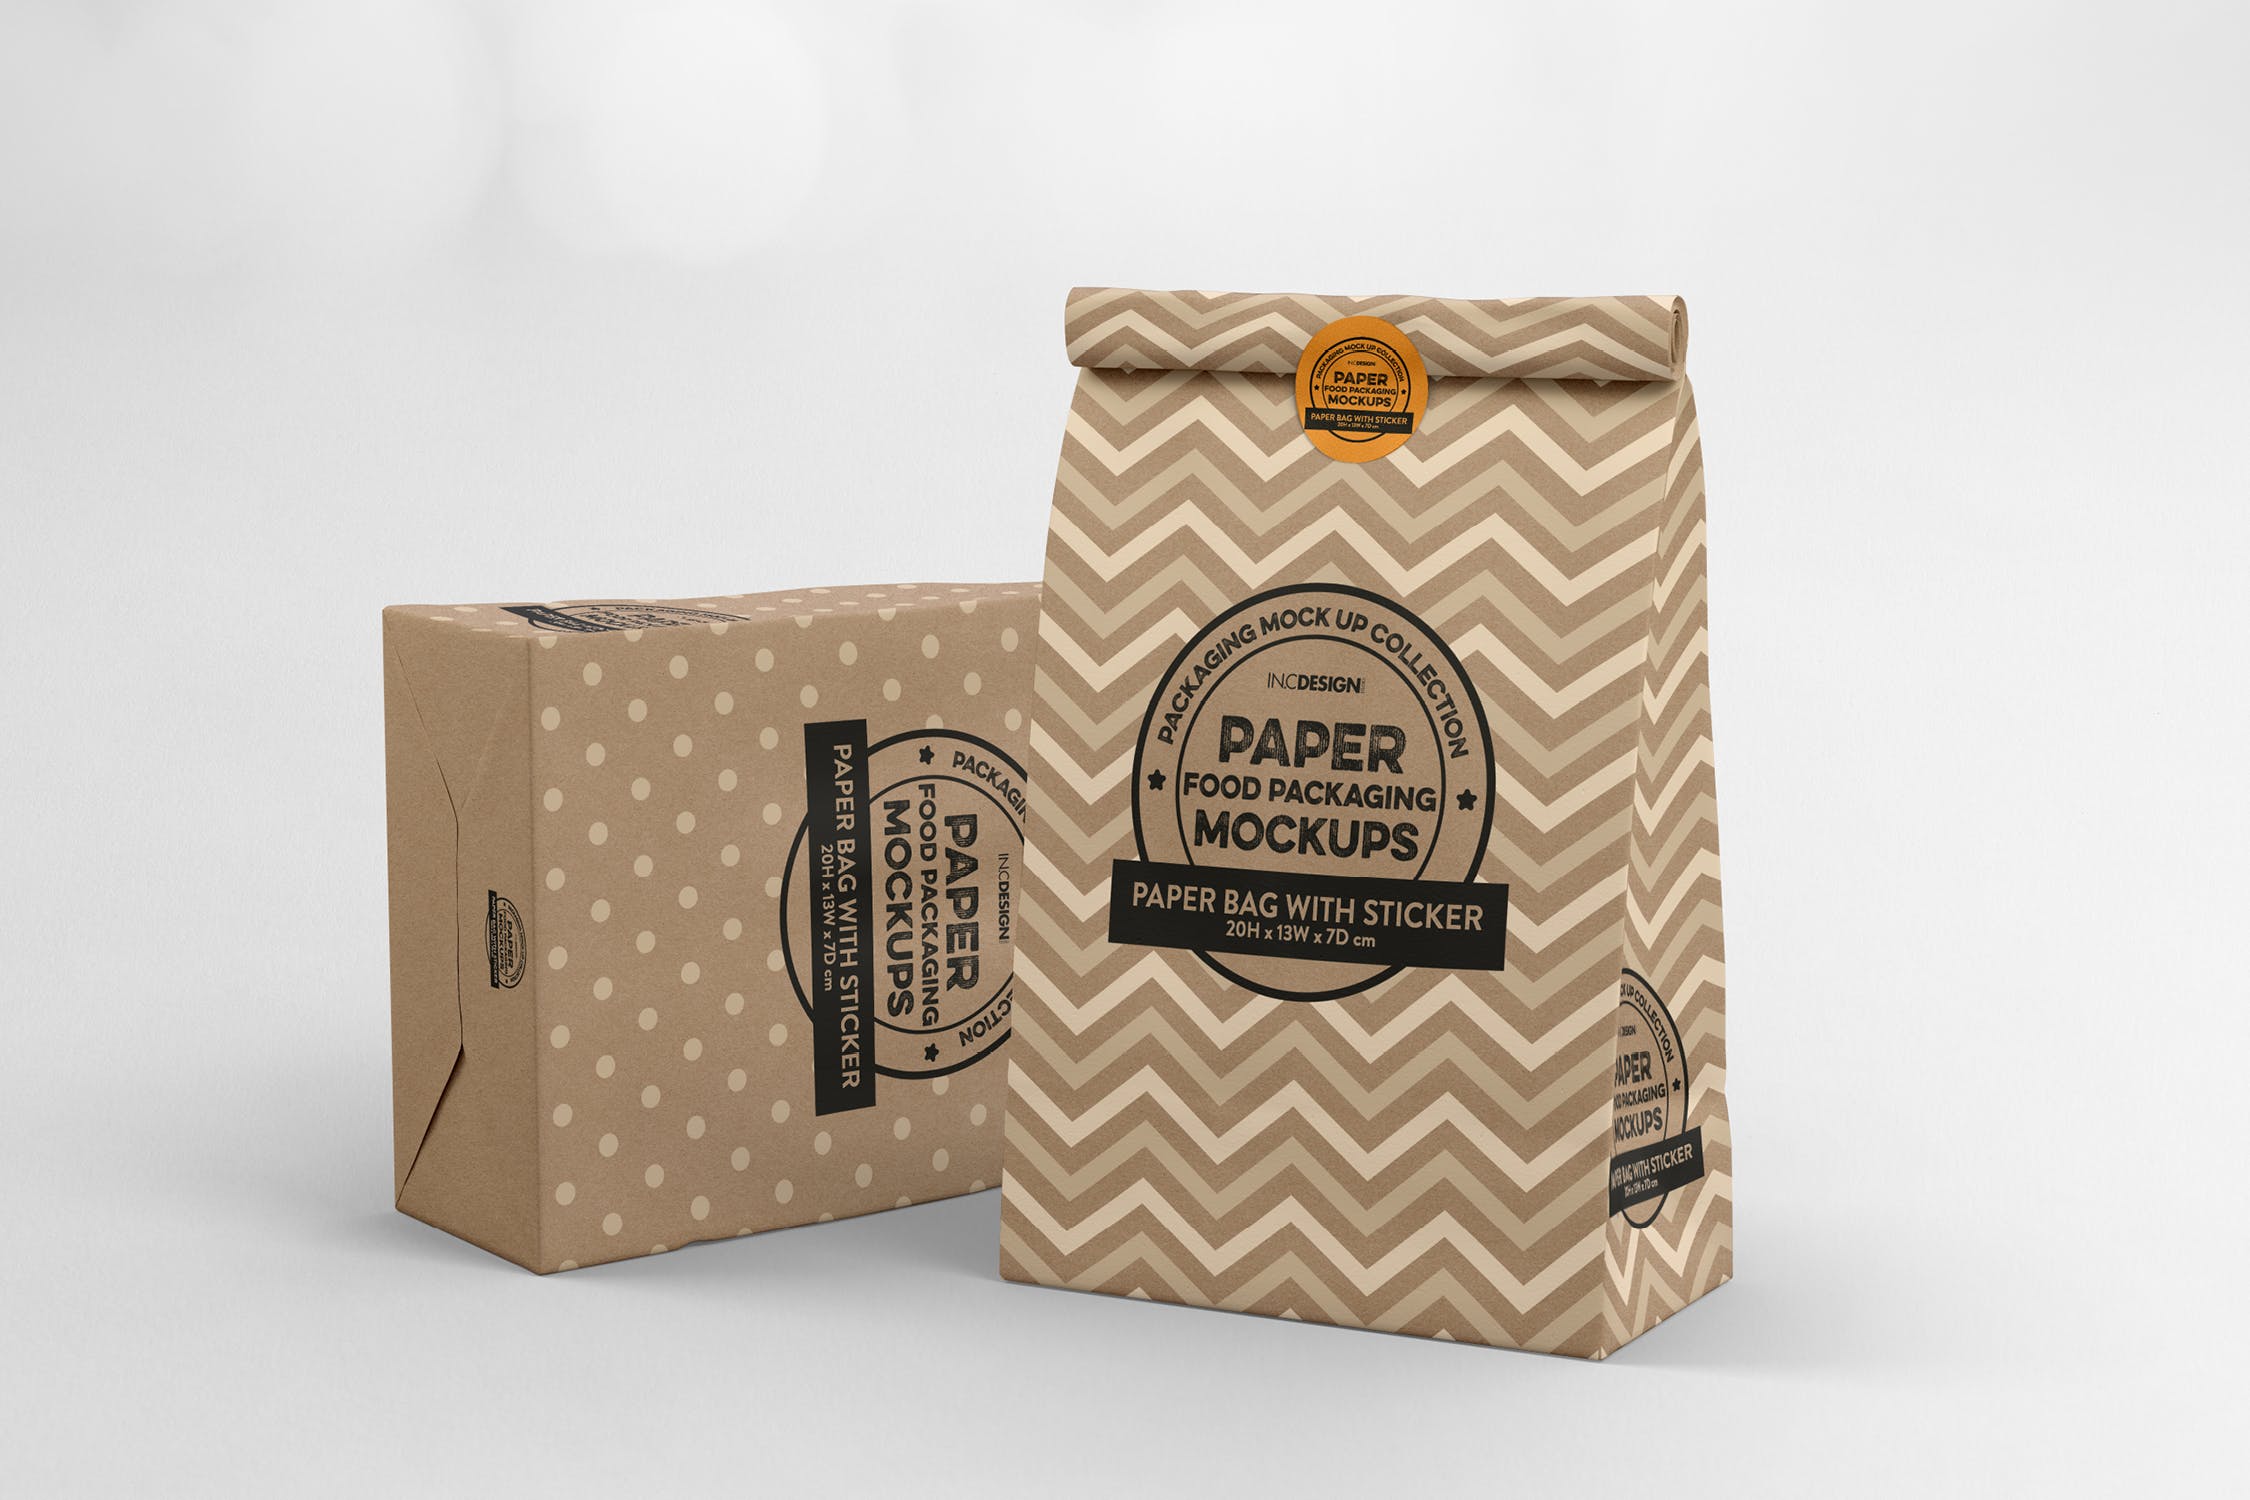 贴纸密封包装纸袋设计效果图蚂蚁素材精选 Paper Bag with sticker Seal Packaging Mockup插图(1)